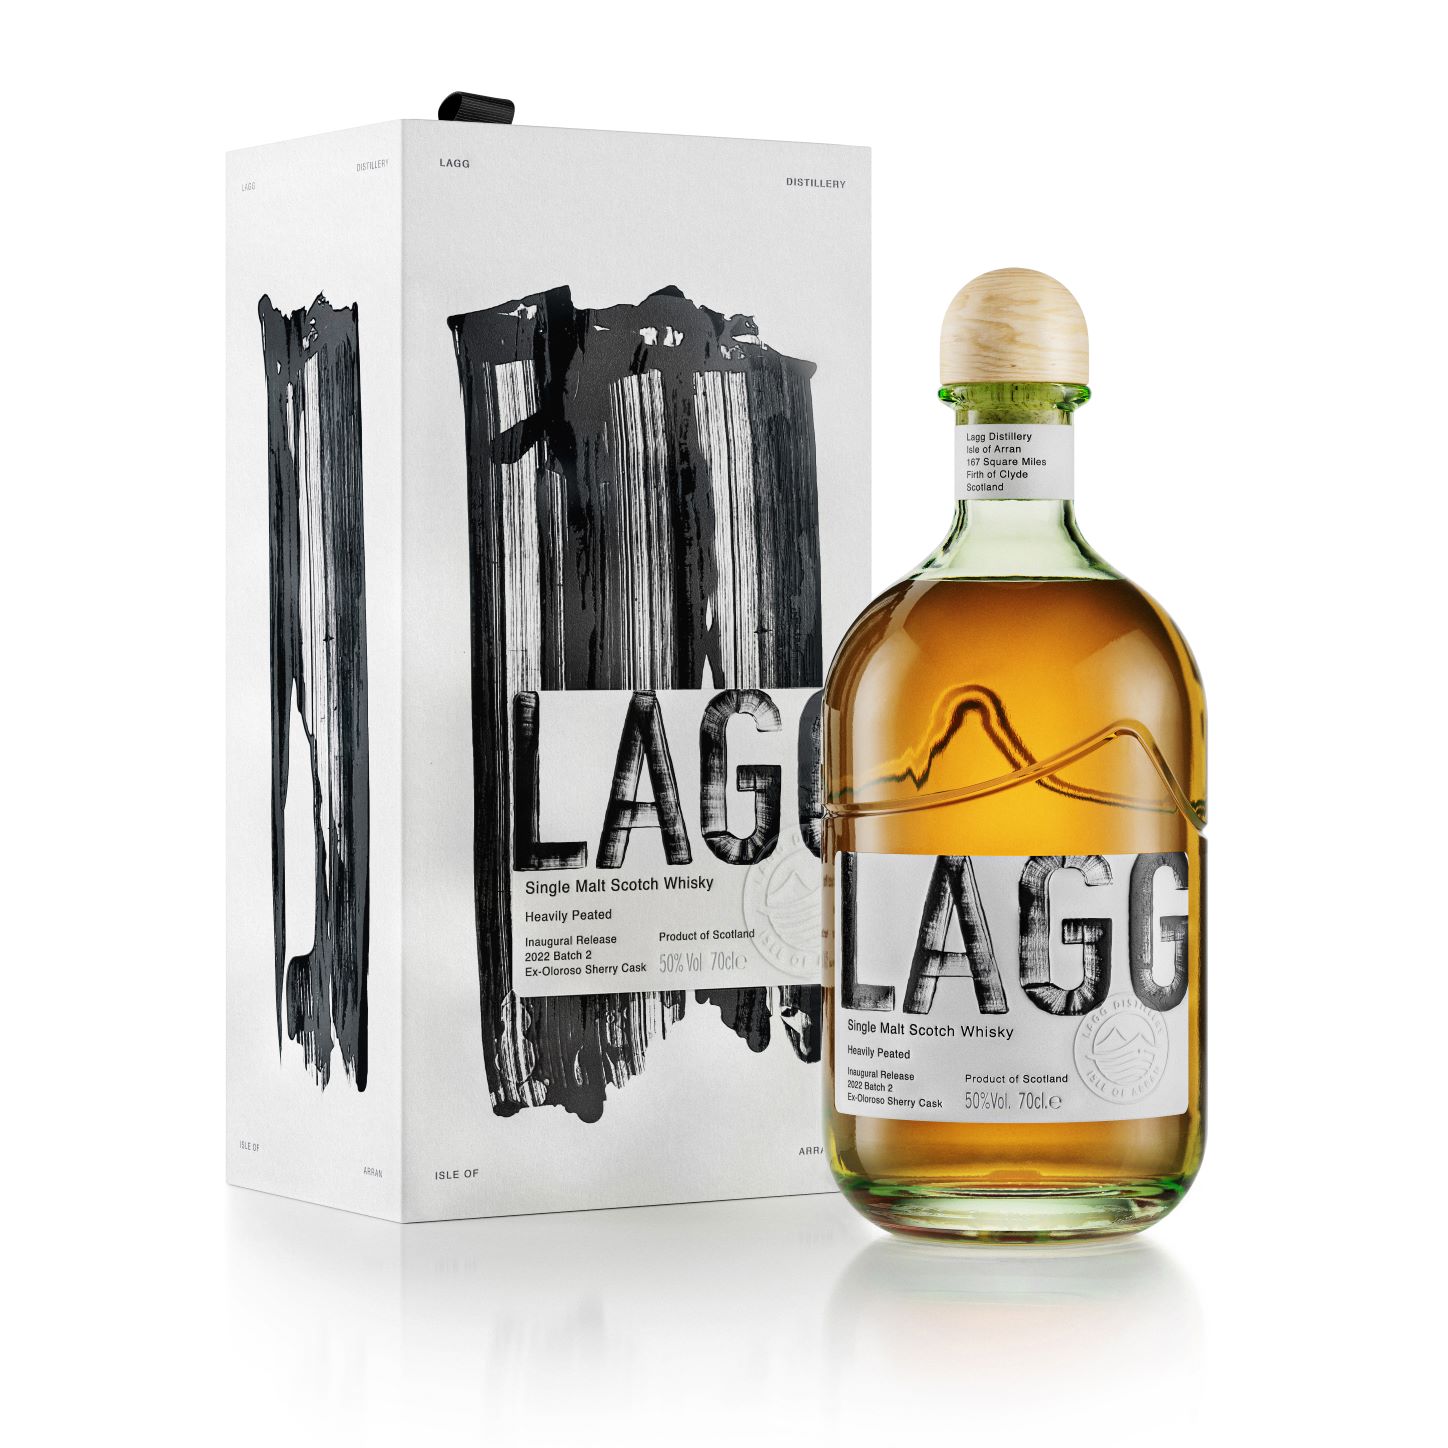 Lagg Single Malt Inaugural Release Batch 2